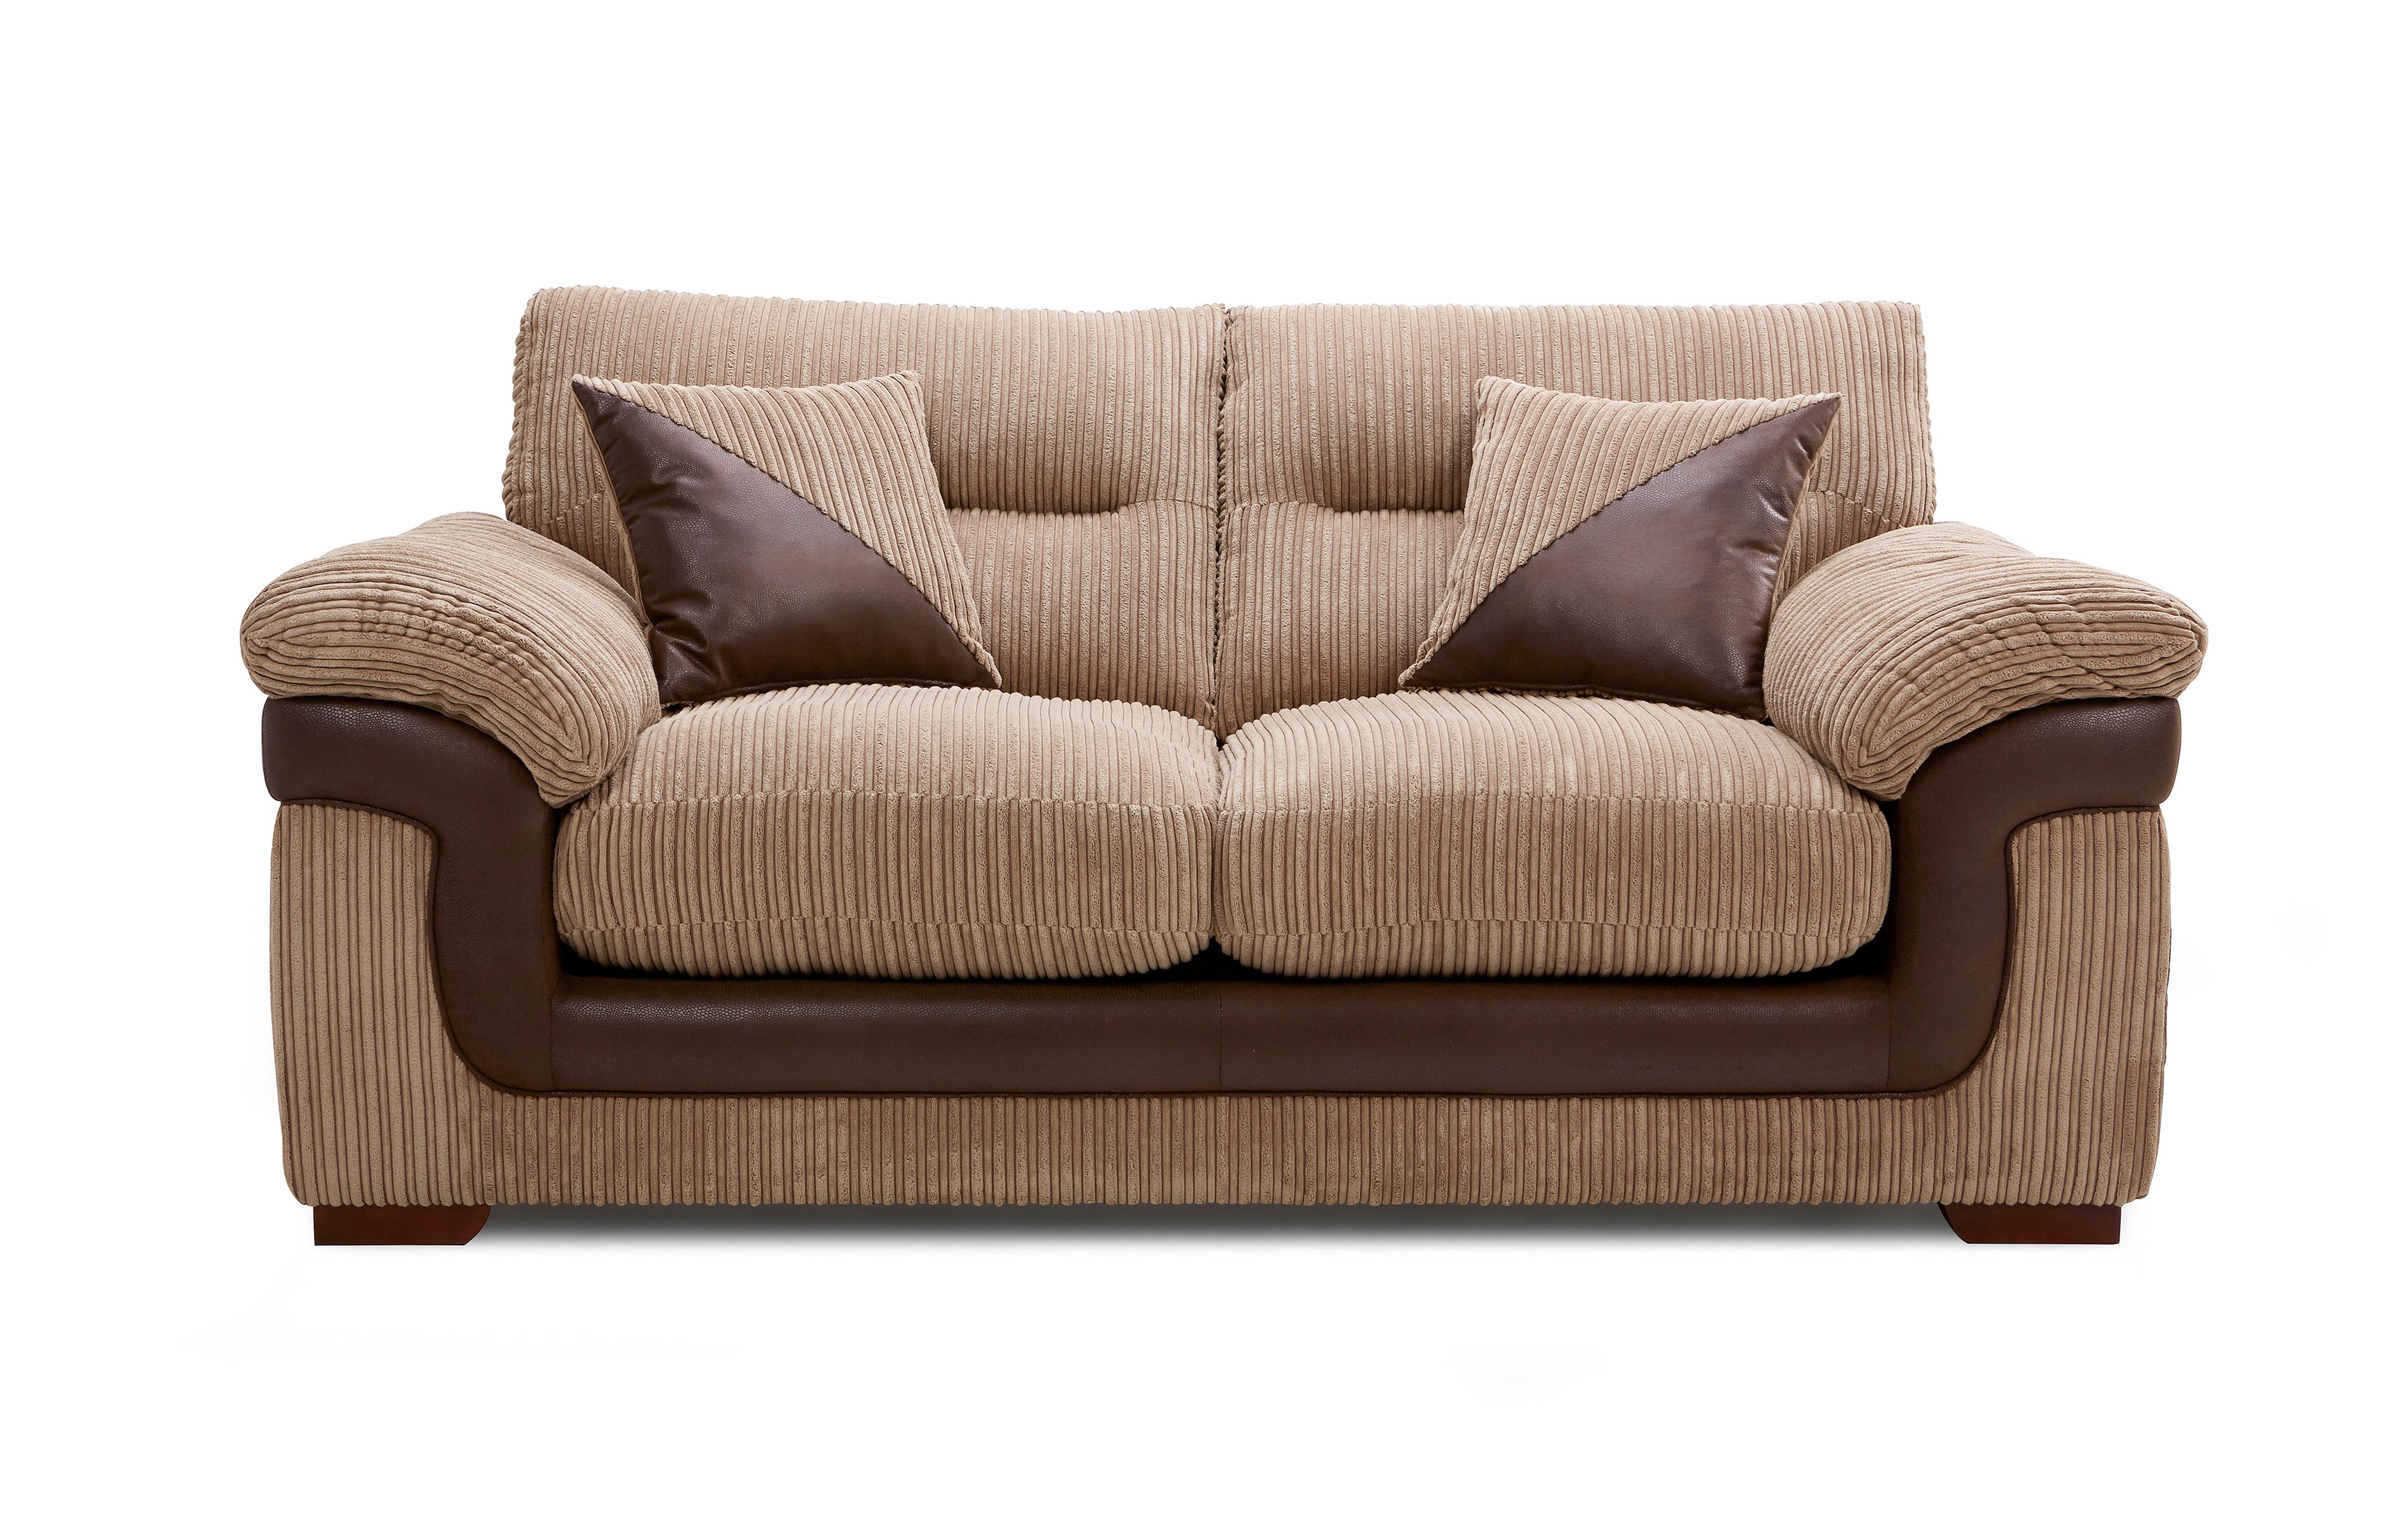 Laura Ashley Abingdon 2 Seater Sofa Bed Brokeasshome com